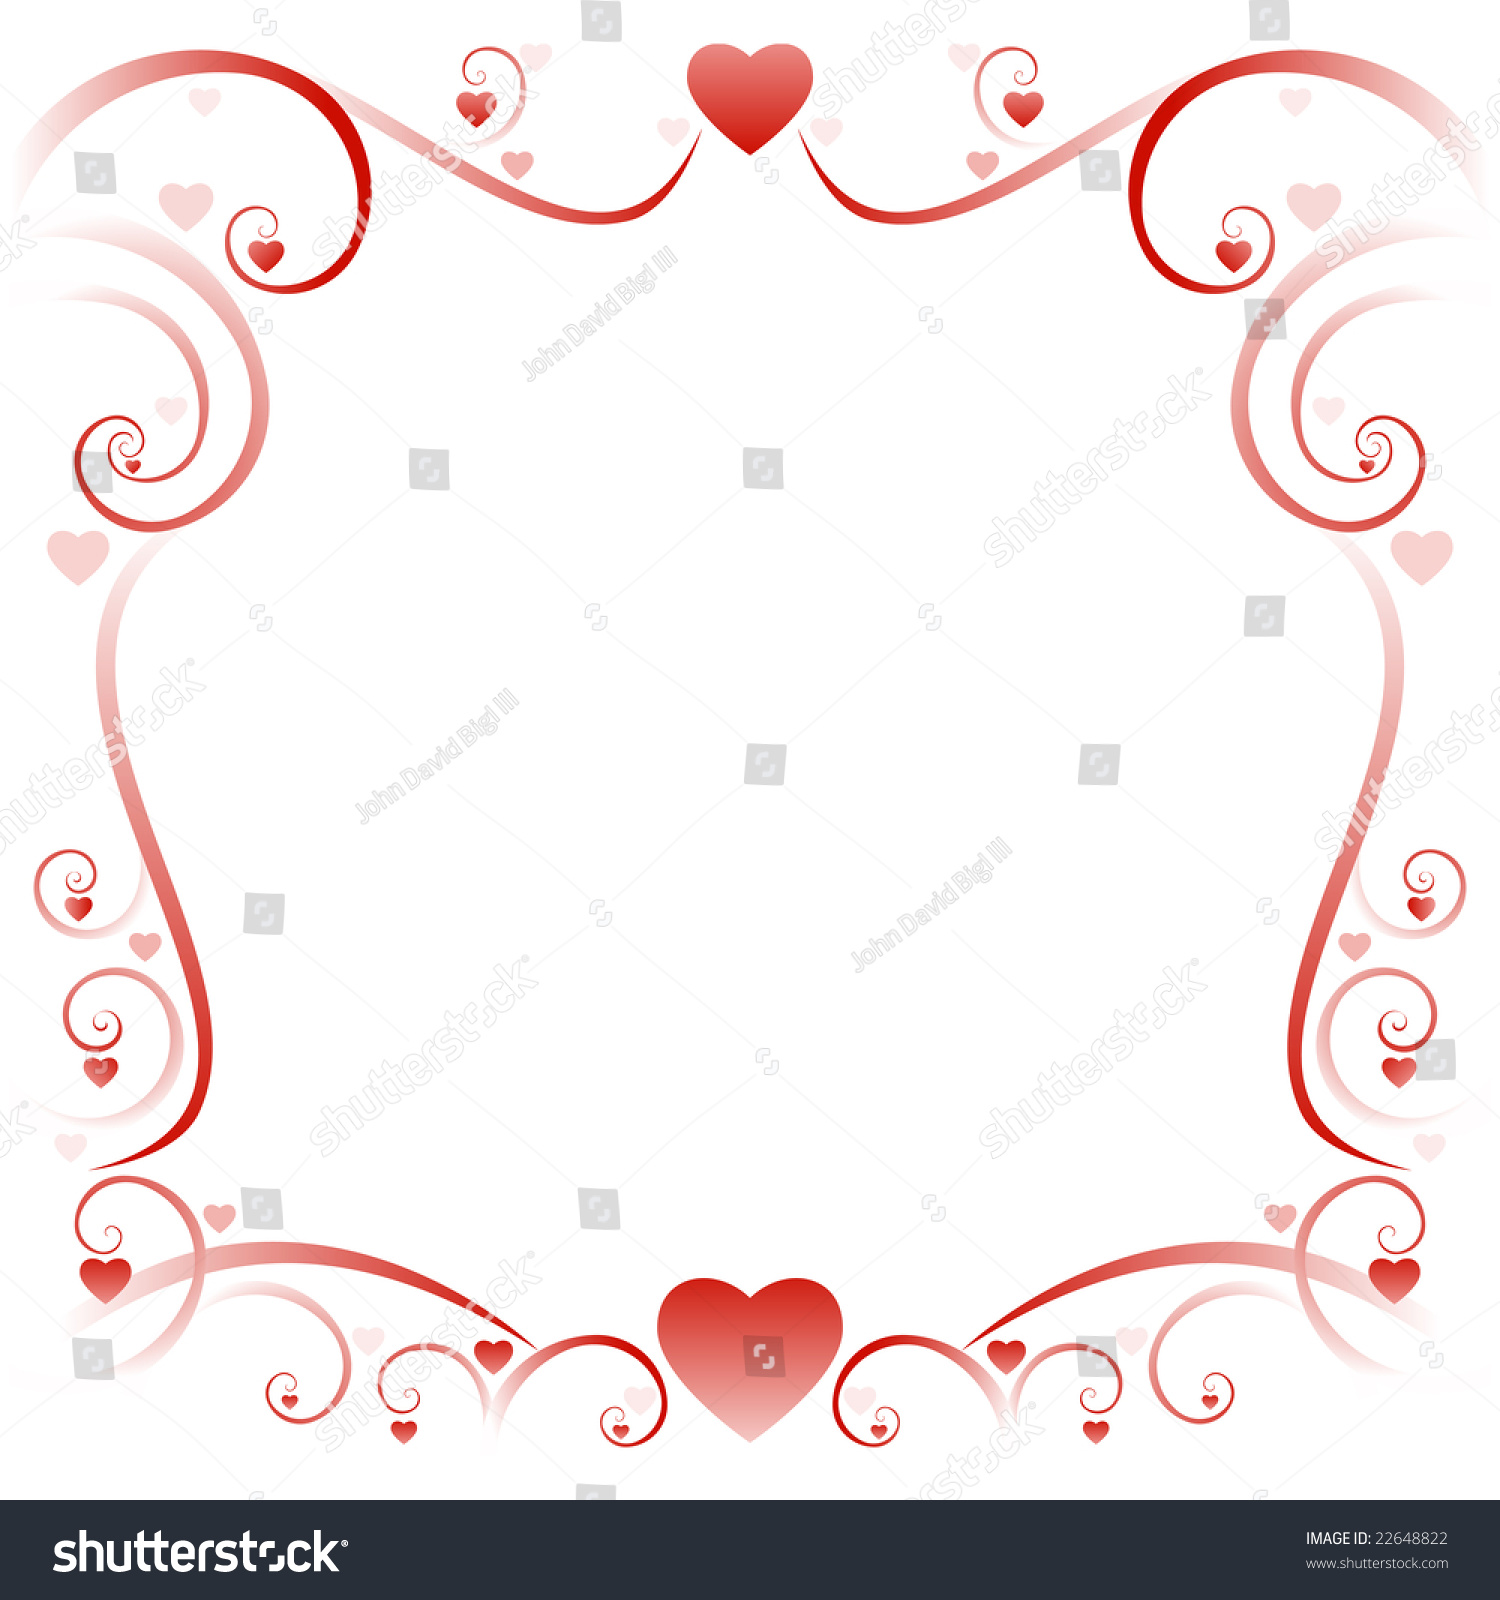 Border Swirls Hearts Stock Illustration 22648822 - Shutterstock